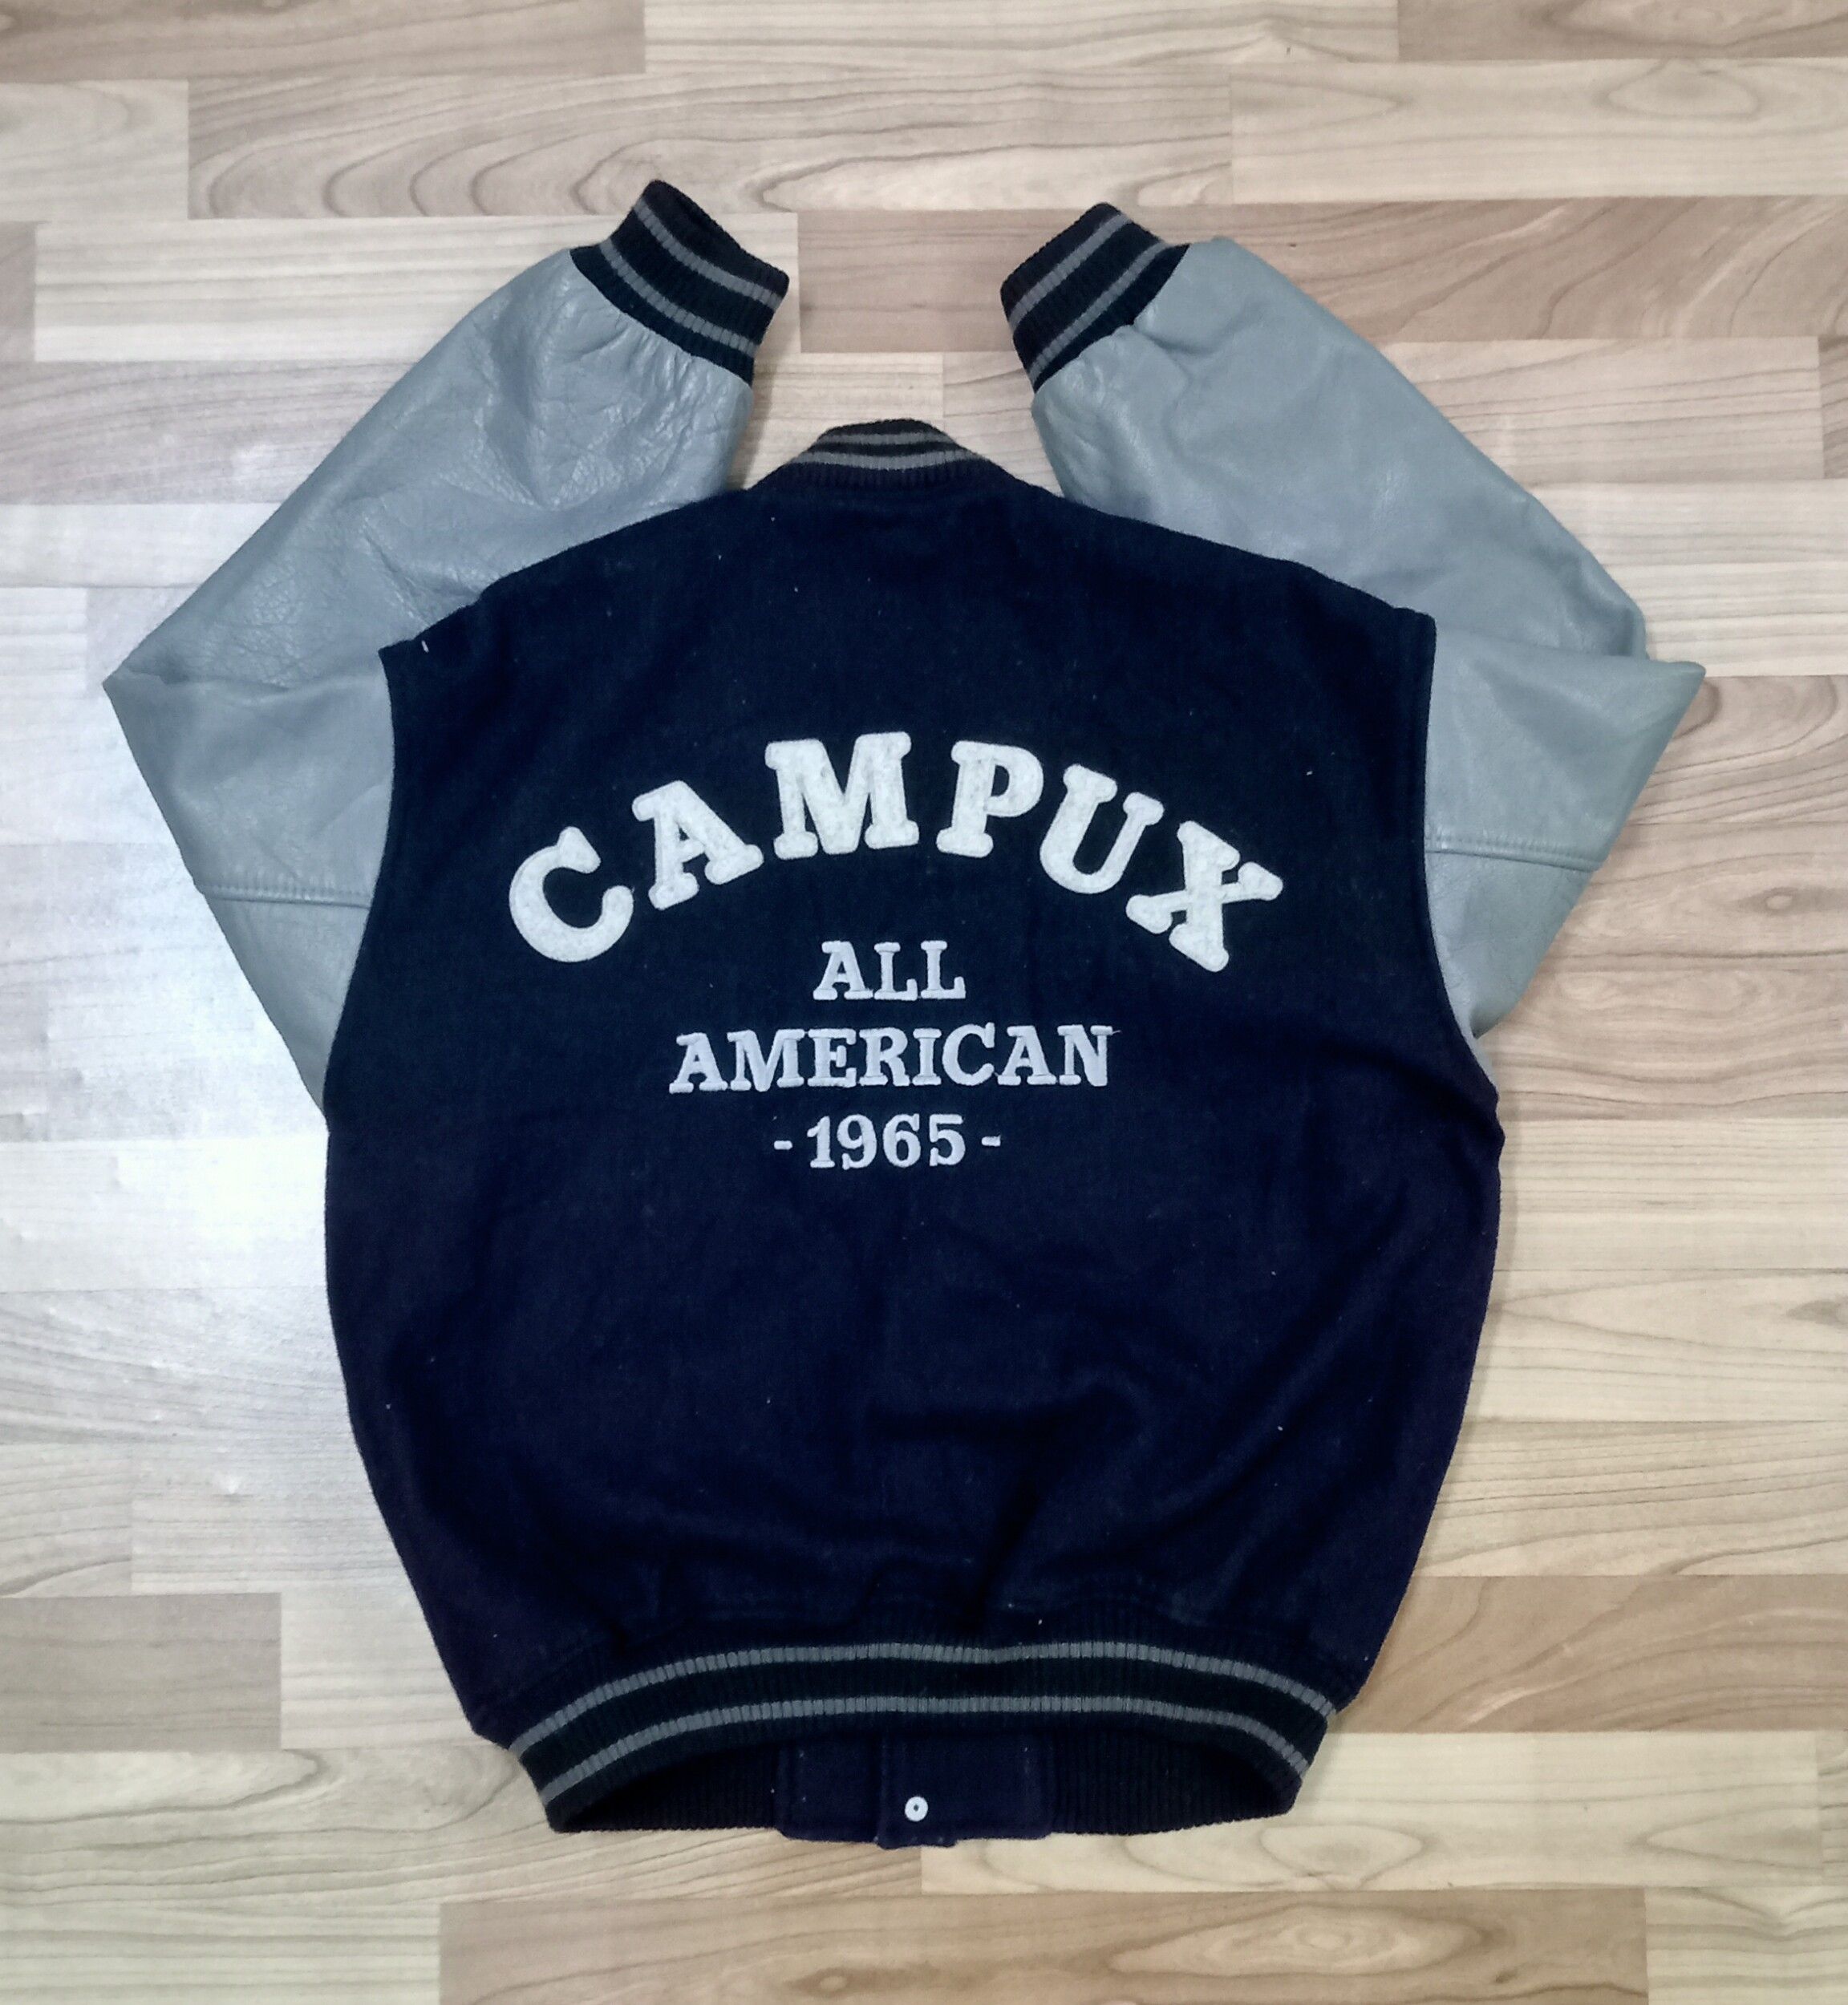 Avant Garde Vintage Campux All American Varsity Jacket Size US M / EU 48-50 / 2 - 1 Preview